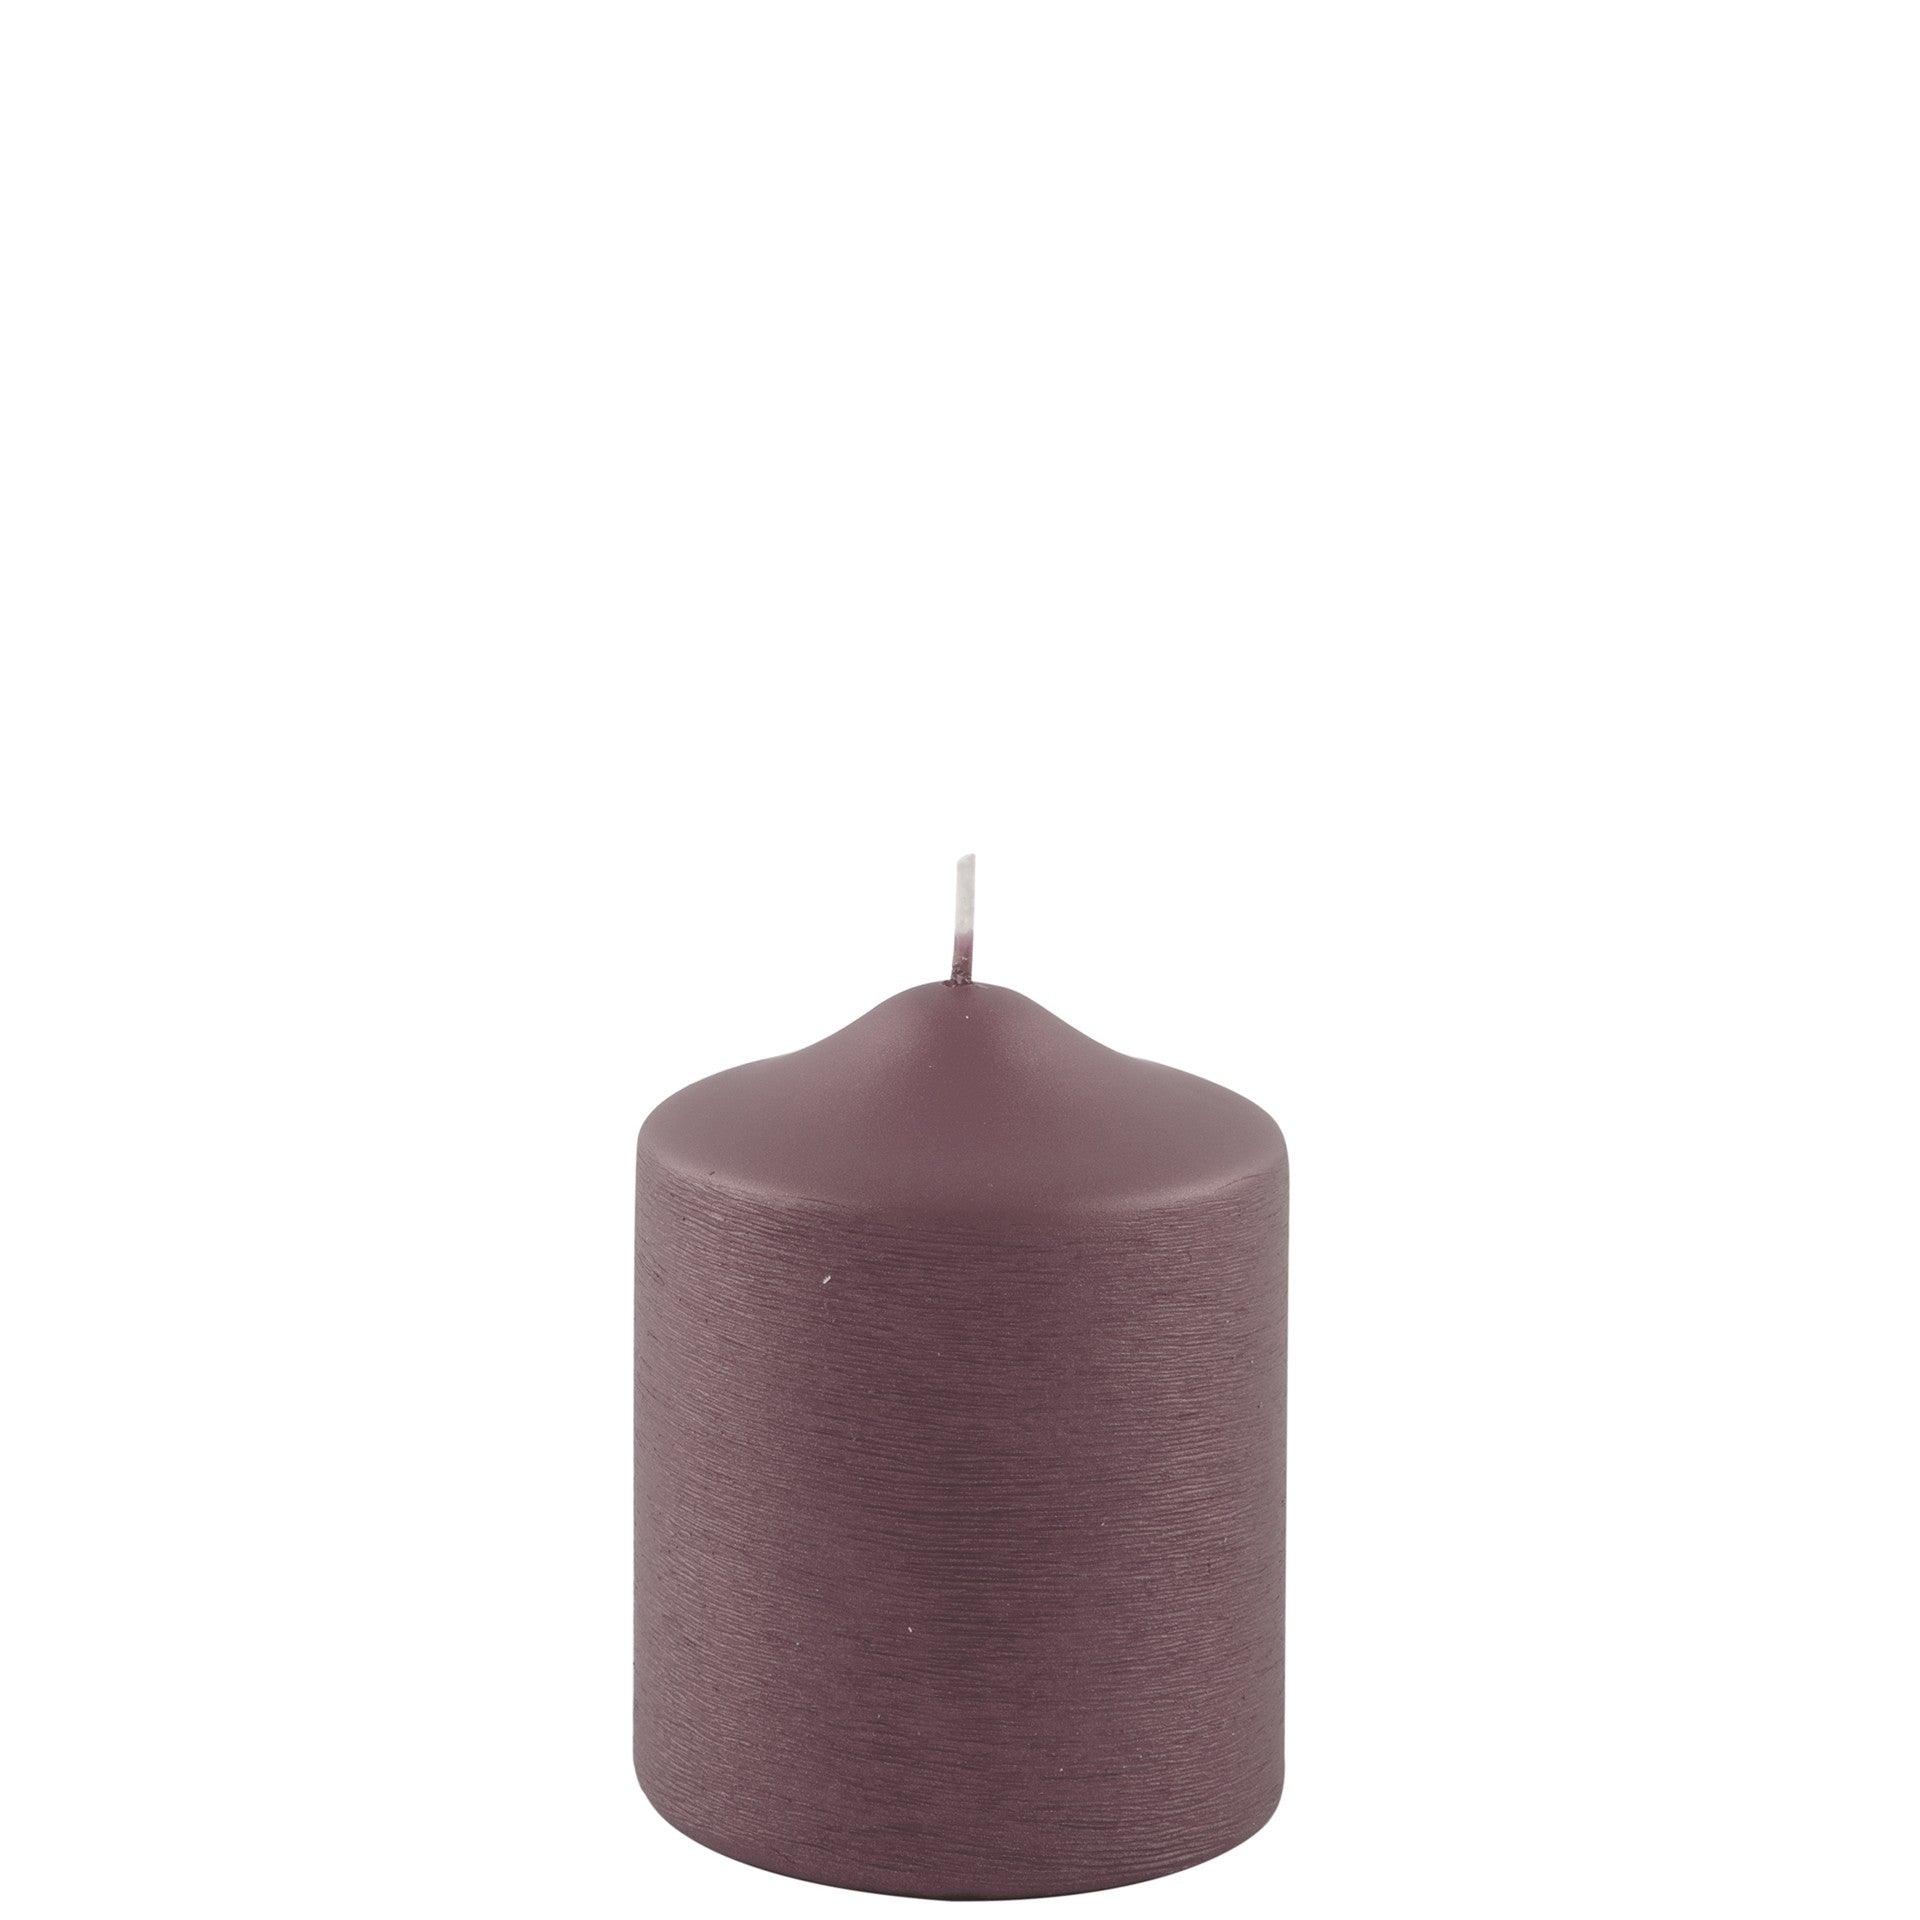 Fink Candle Stumpenkerze metallic gebürstet Bordeaux 10cm - HomeDesign Knaus wir schaffen Inspirationen 